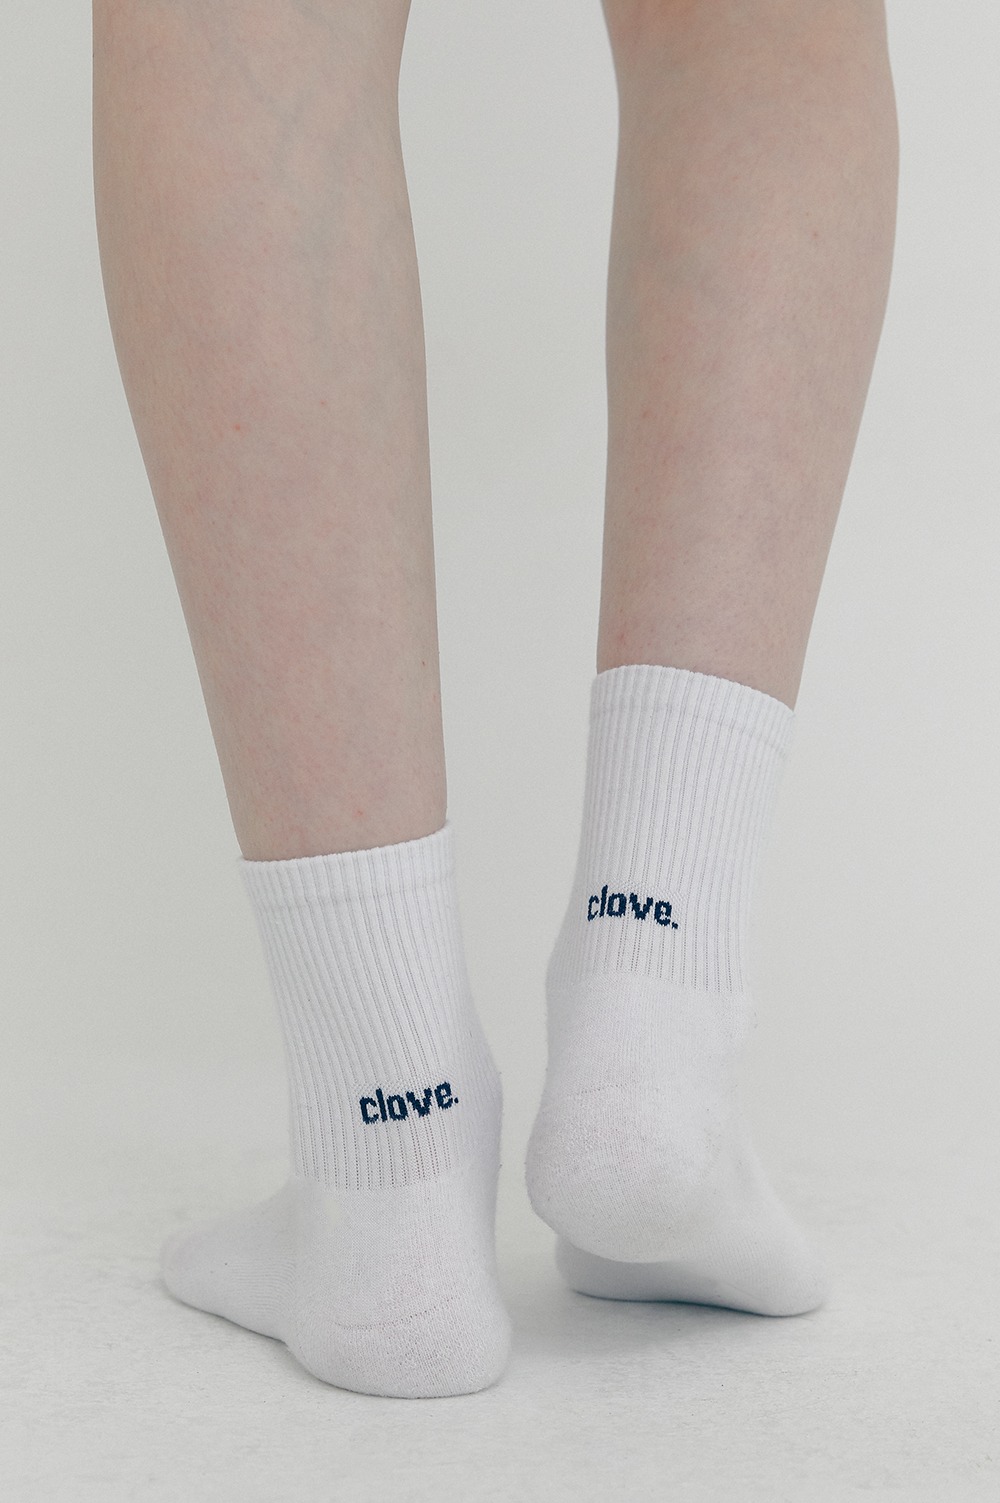 clove - [7/19(화) 예약배송]Clove Coolmax Socks Navy (2pcs)